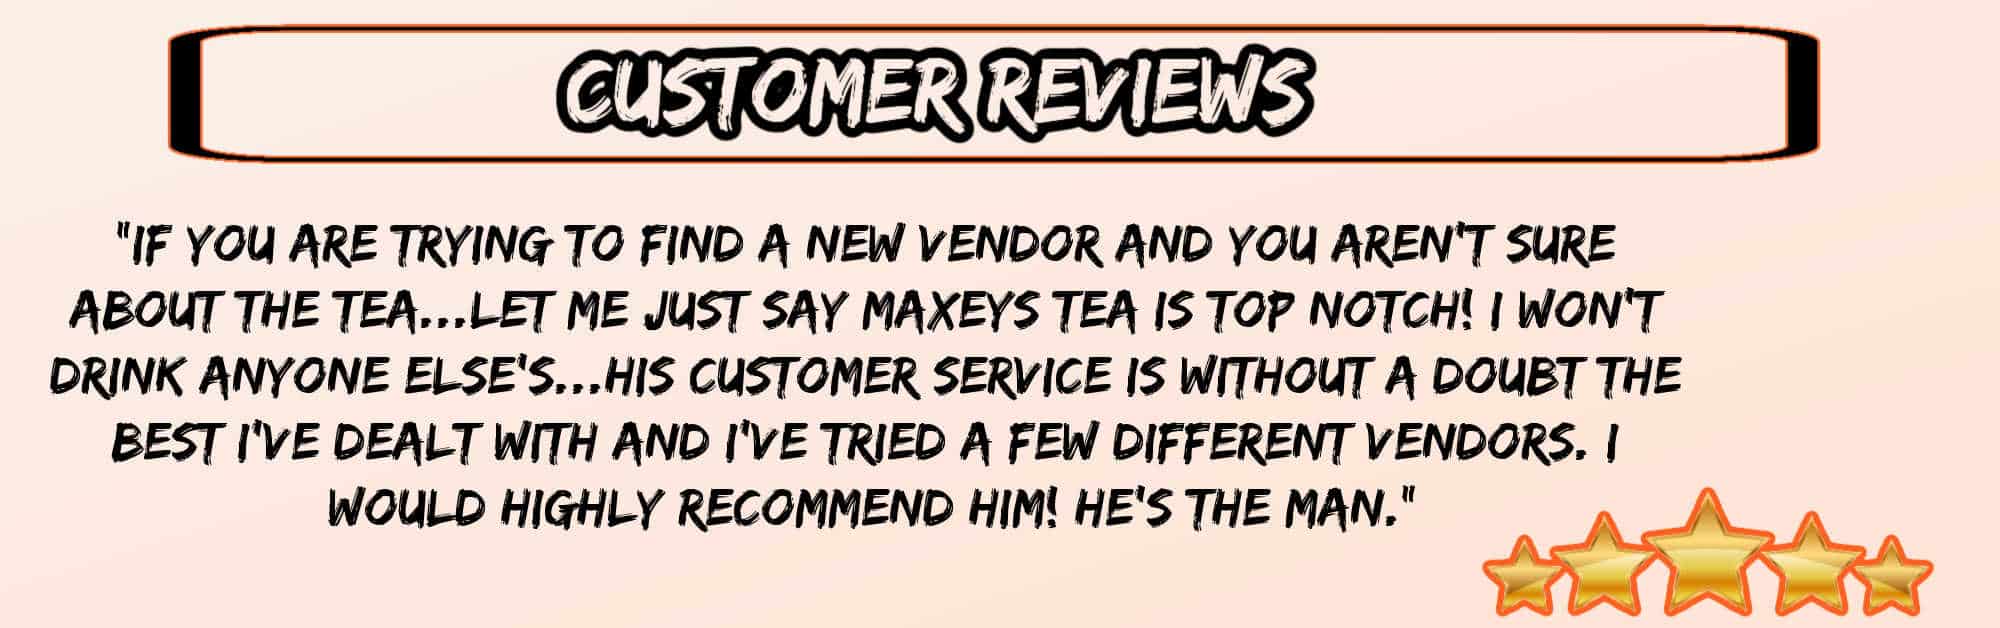 image of maxeys kratom house customer reviews